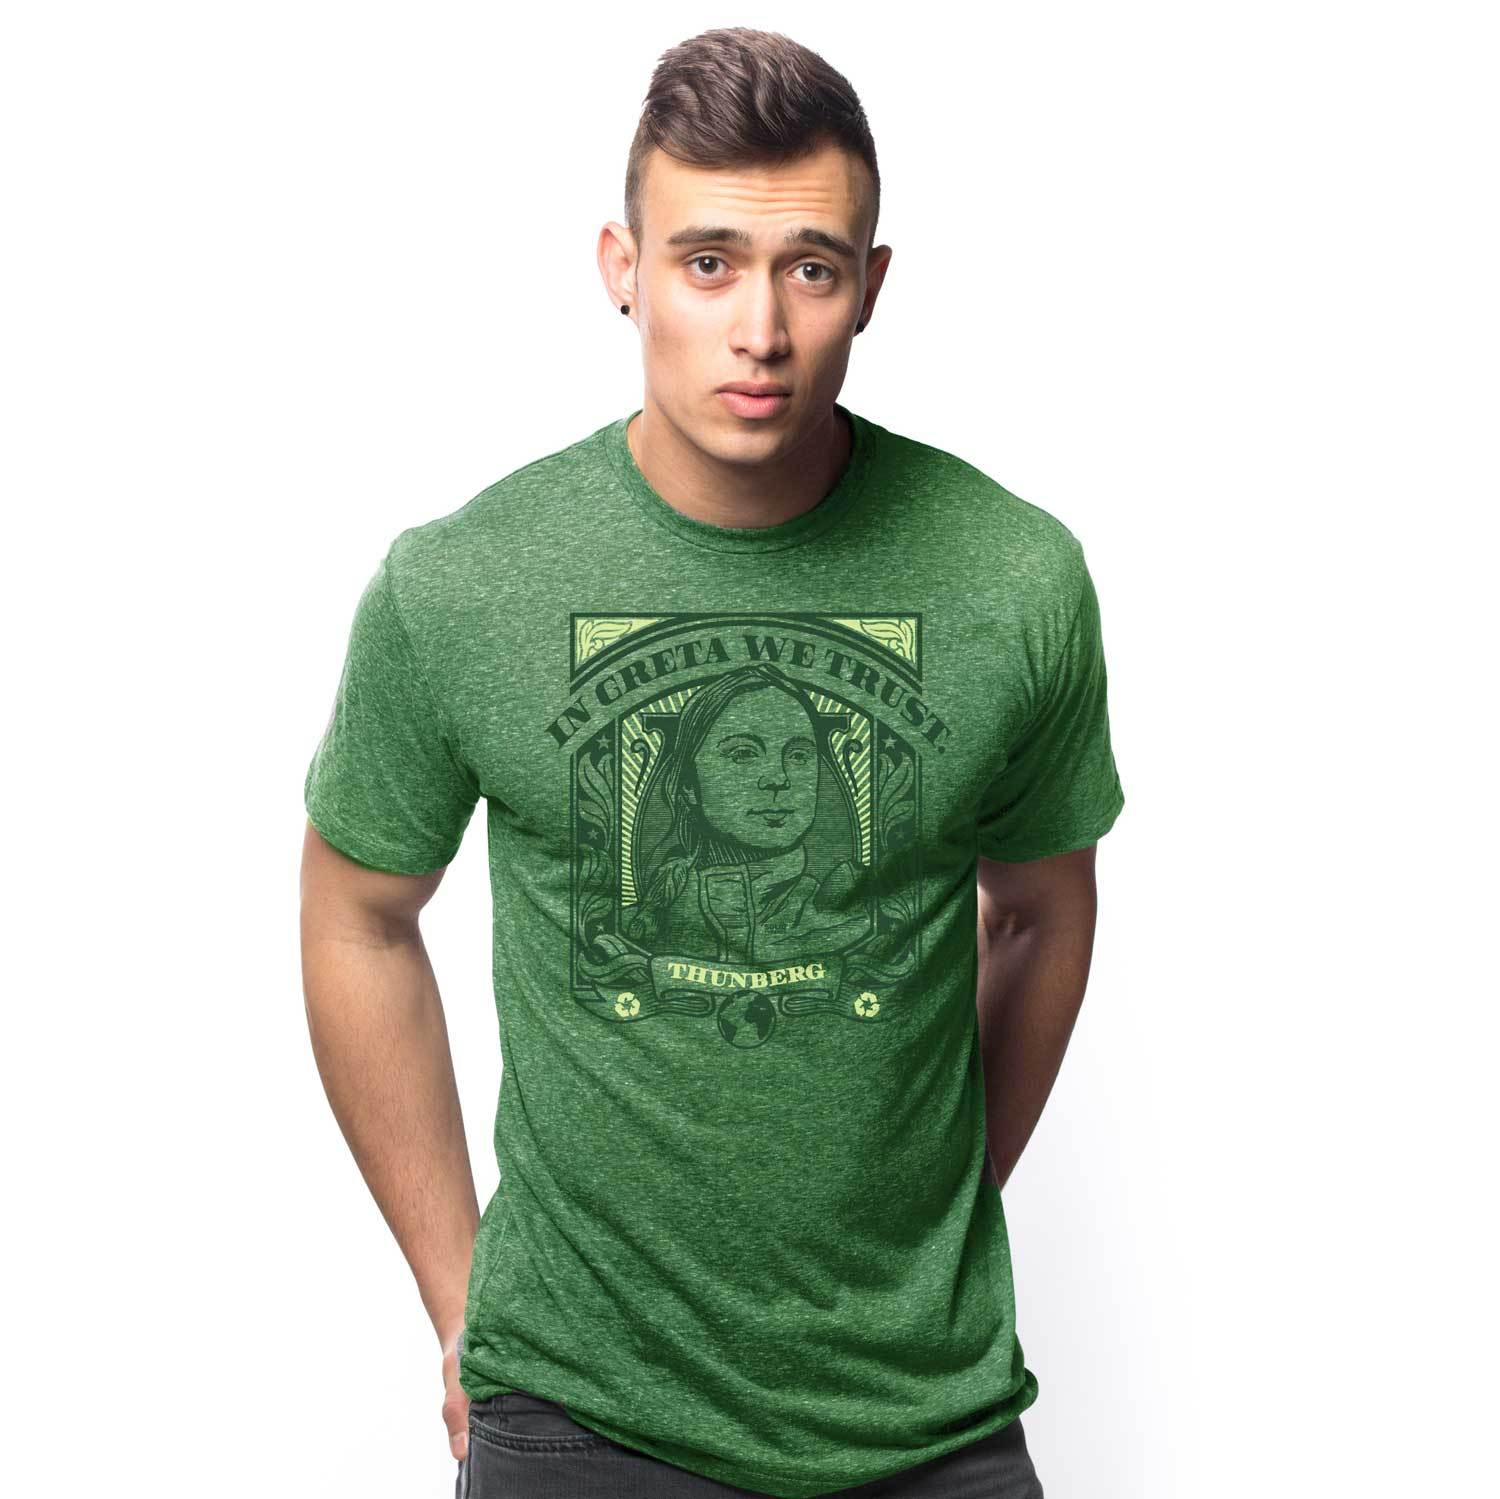 Men's In Greta Thunberg We Trust Vintage Inspired T-Shirt | Retro Environmental Activism Graphic Tee | Solid Threads